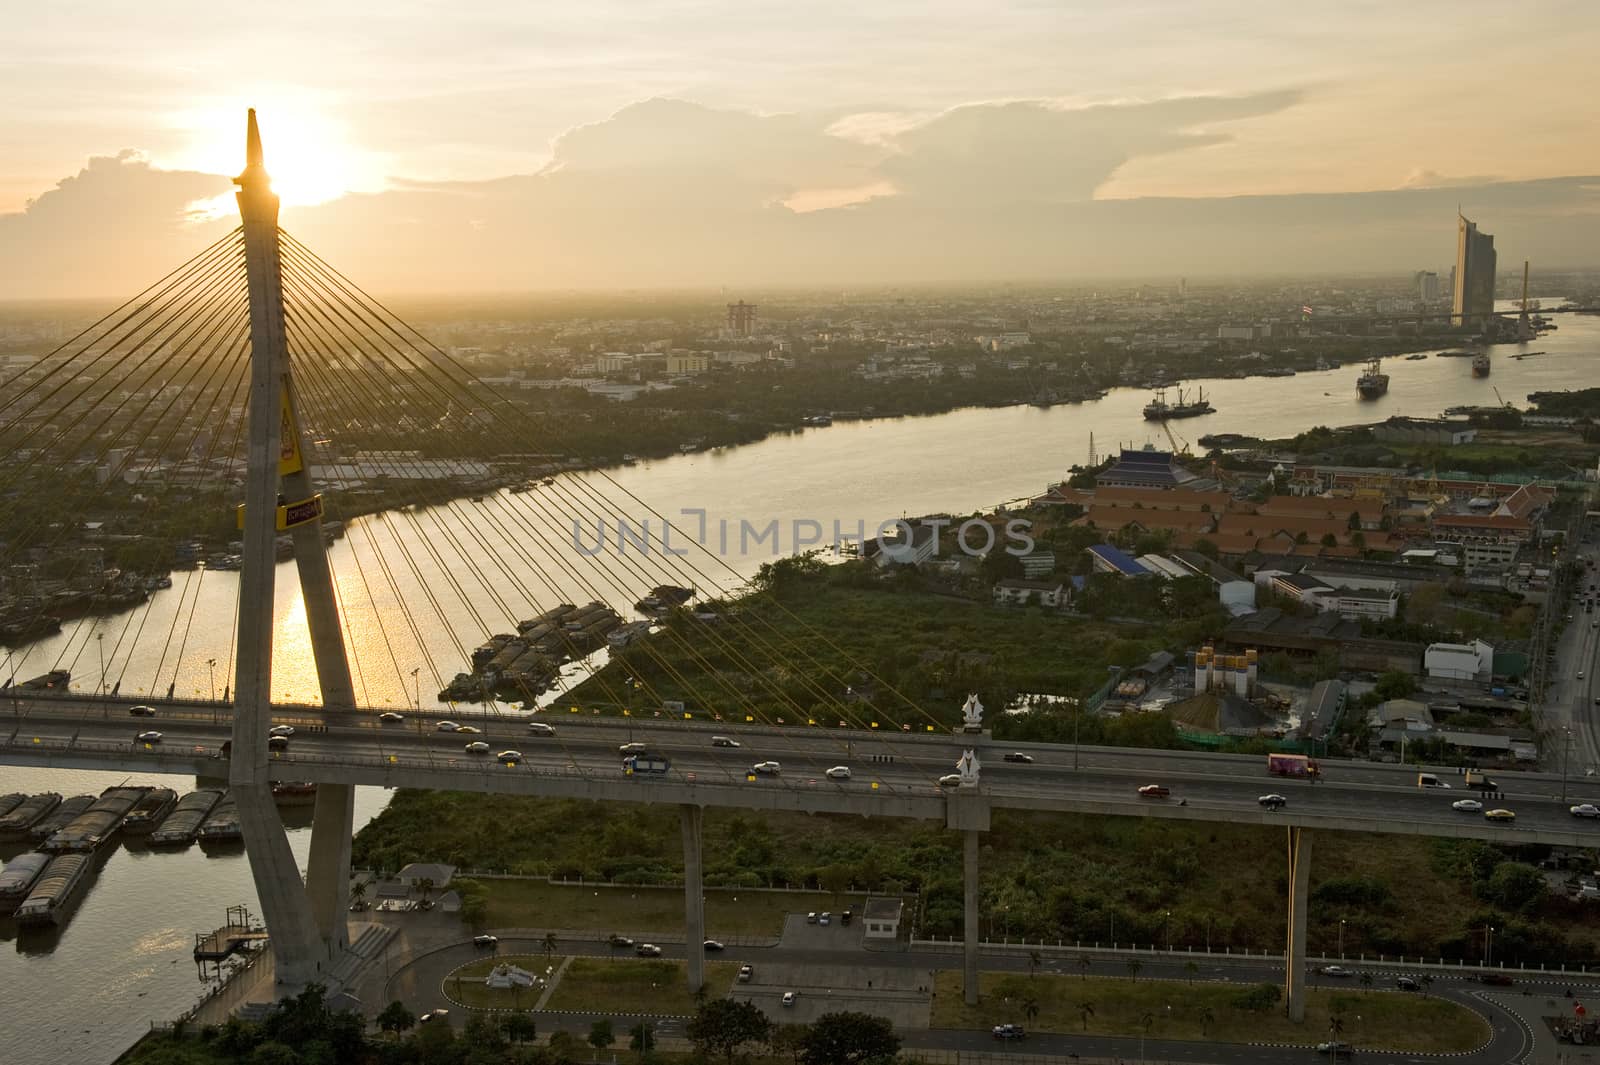 Bhumibol Bridge, Bangkok, Thailand by think4photop